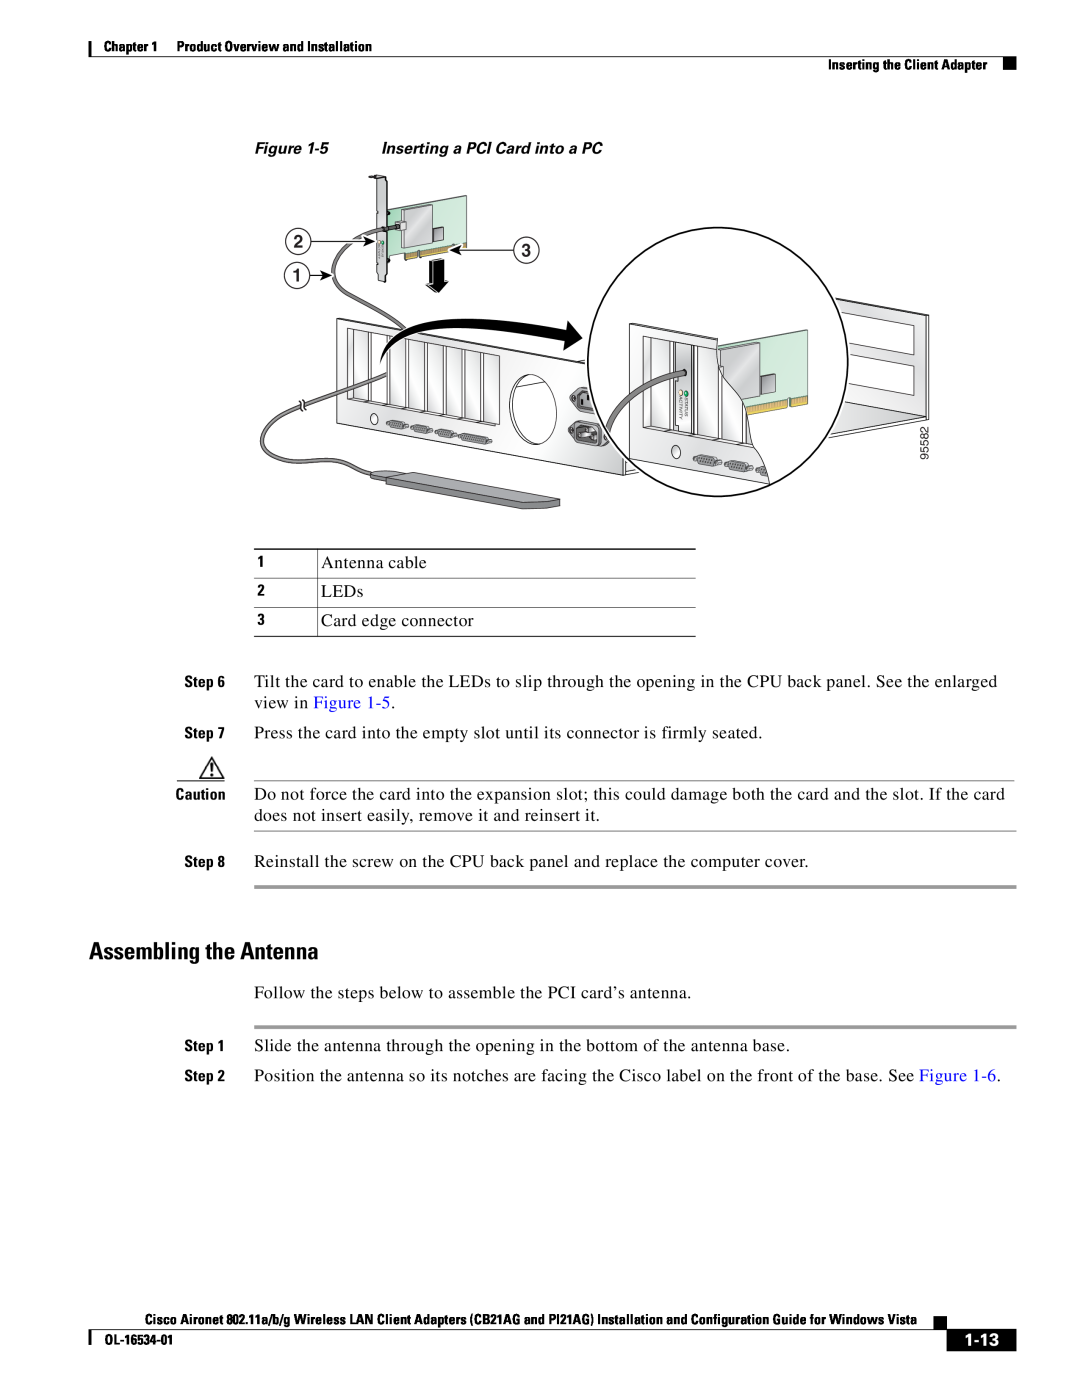 Cisco Systems CB21AG, PI21AG manual Assembling the Antenna, 1-13 